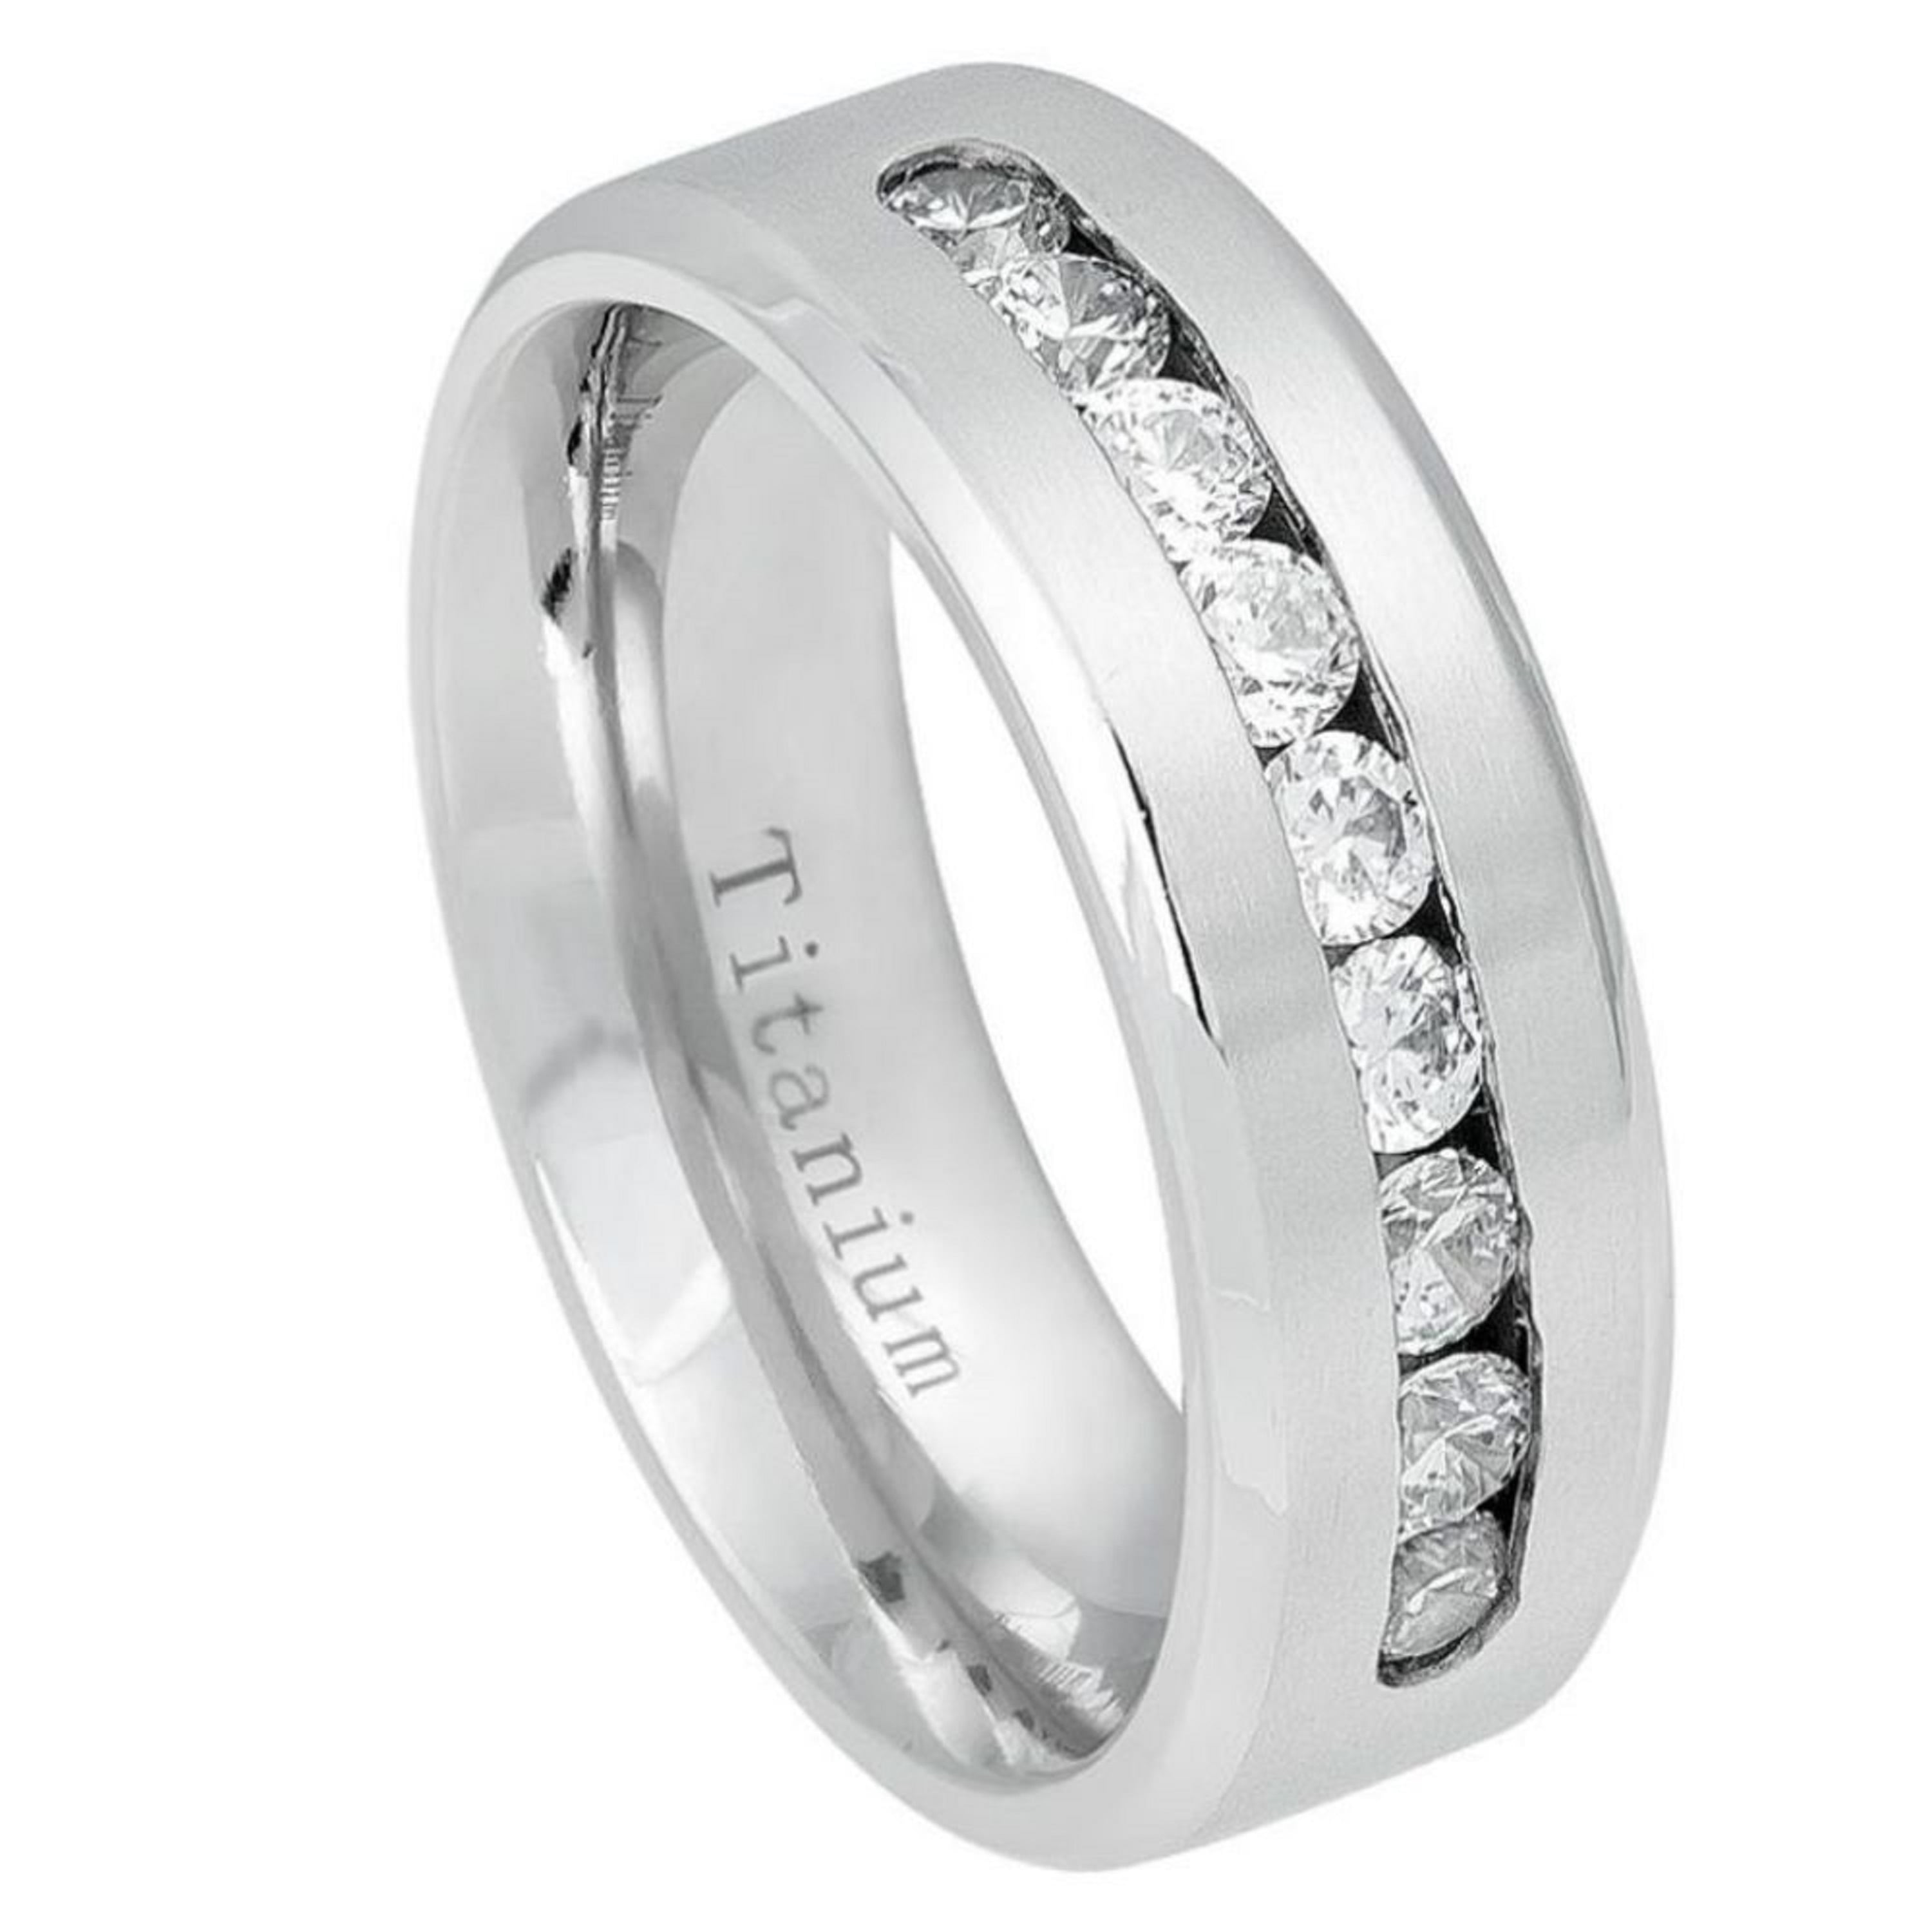 Engraved 8mm Titanium Men's Ring Black Brushed Center Wedding Band Ring 